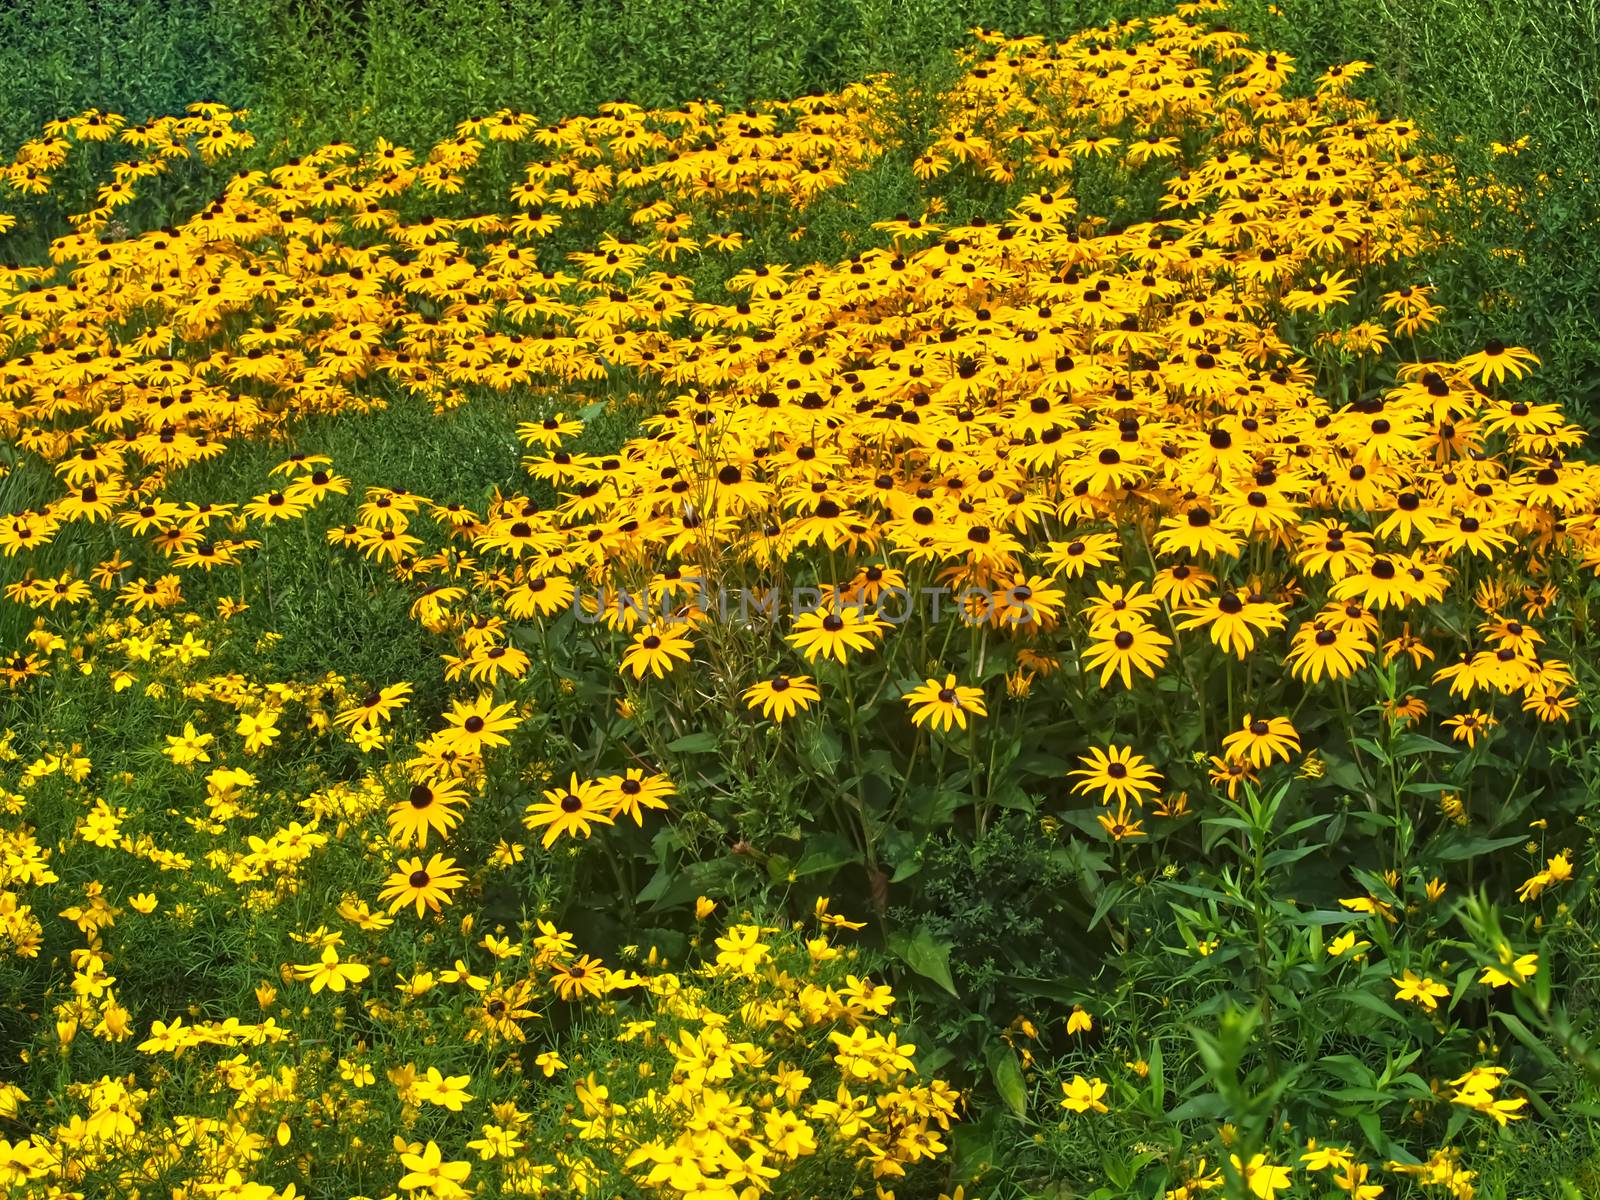 Killespark Stuttgart in Germany - Yellow blooming coneflower carpet by Stimmungsbilder